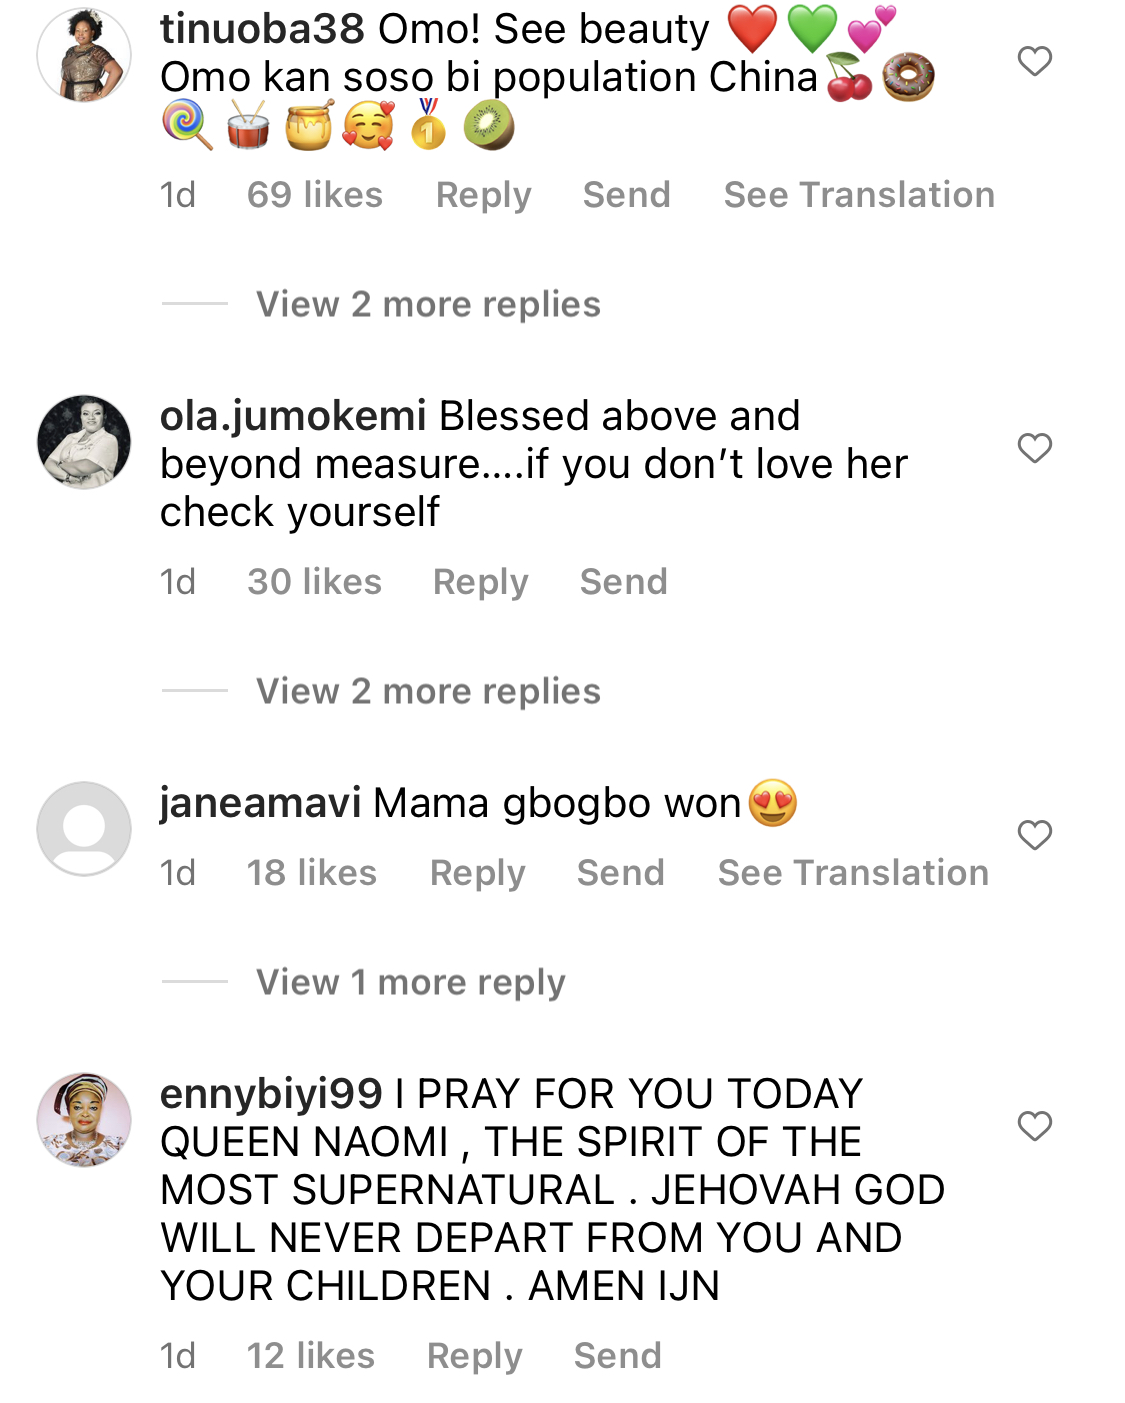 Queen Naomi resumes prophetic work months after divorce from Ooni of Ife [video]